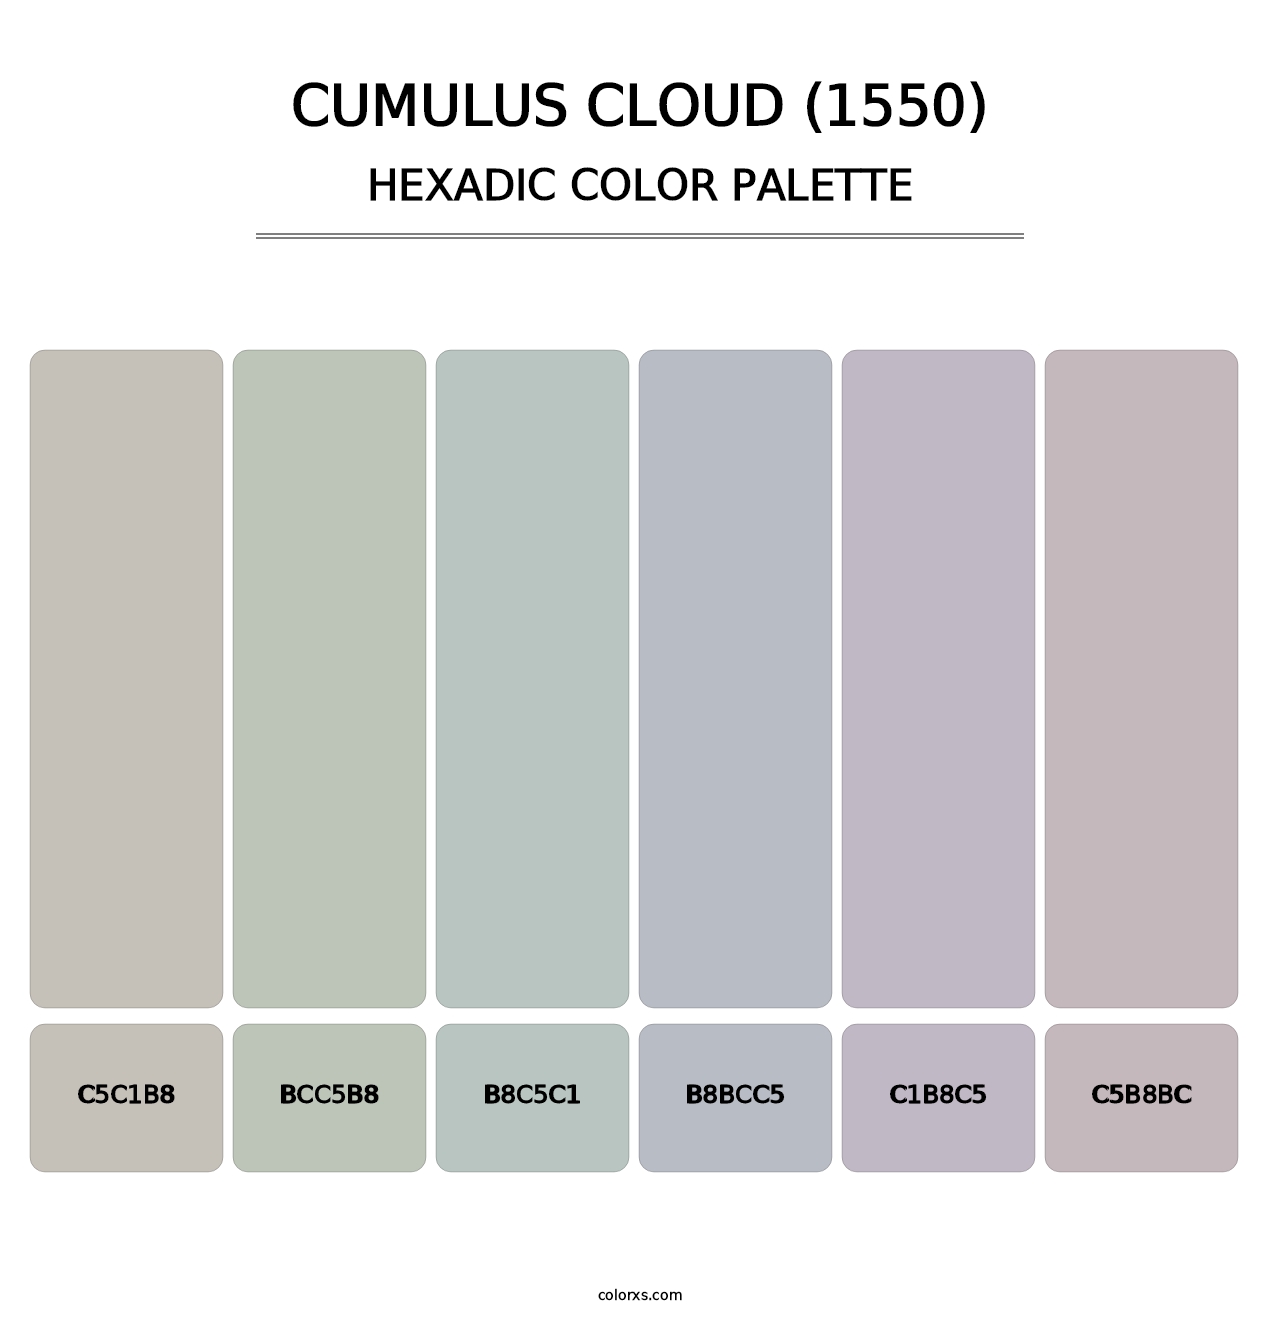 Cumulus Cloud (1550) - Hexadic Color Palette